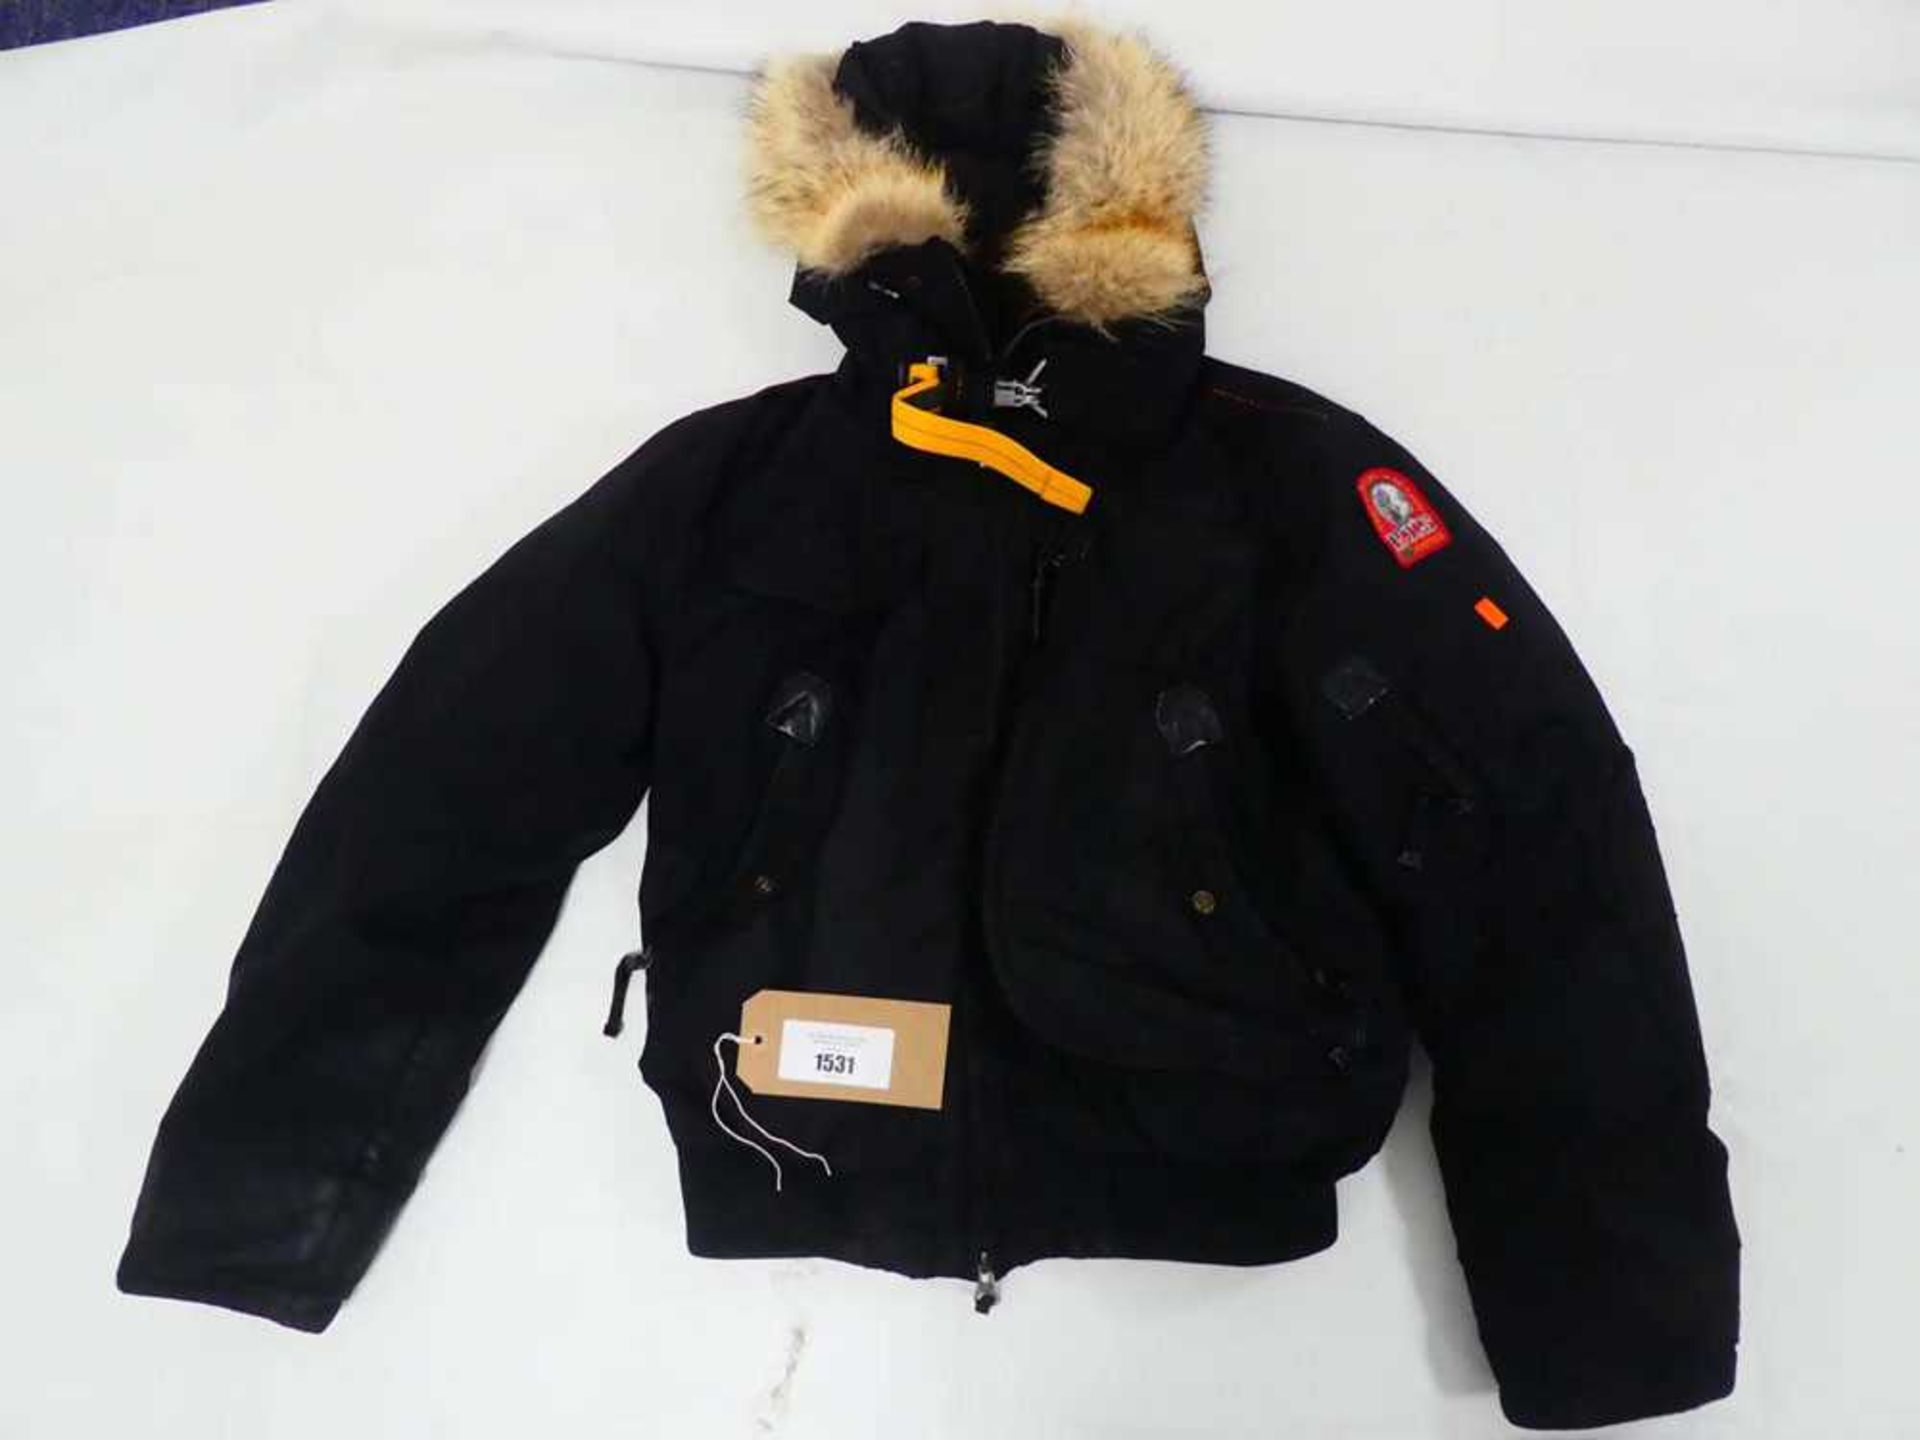 +VAT Parajumpers parka jacket in black size medium (signs of wear)